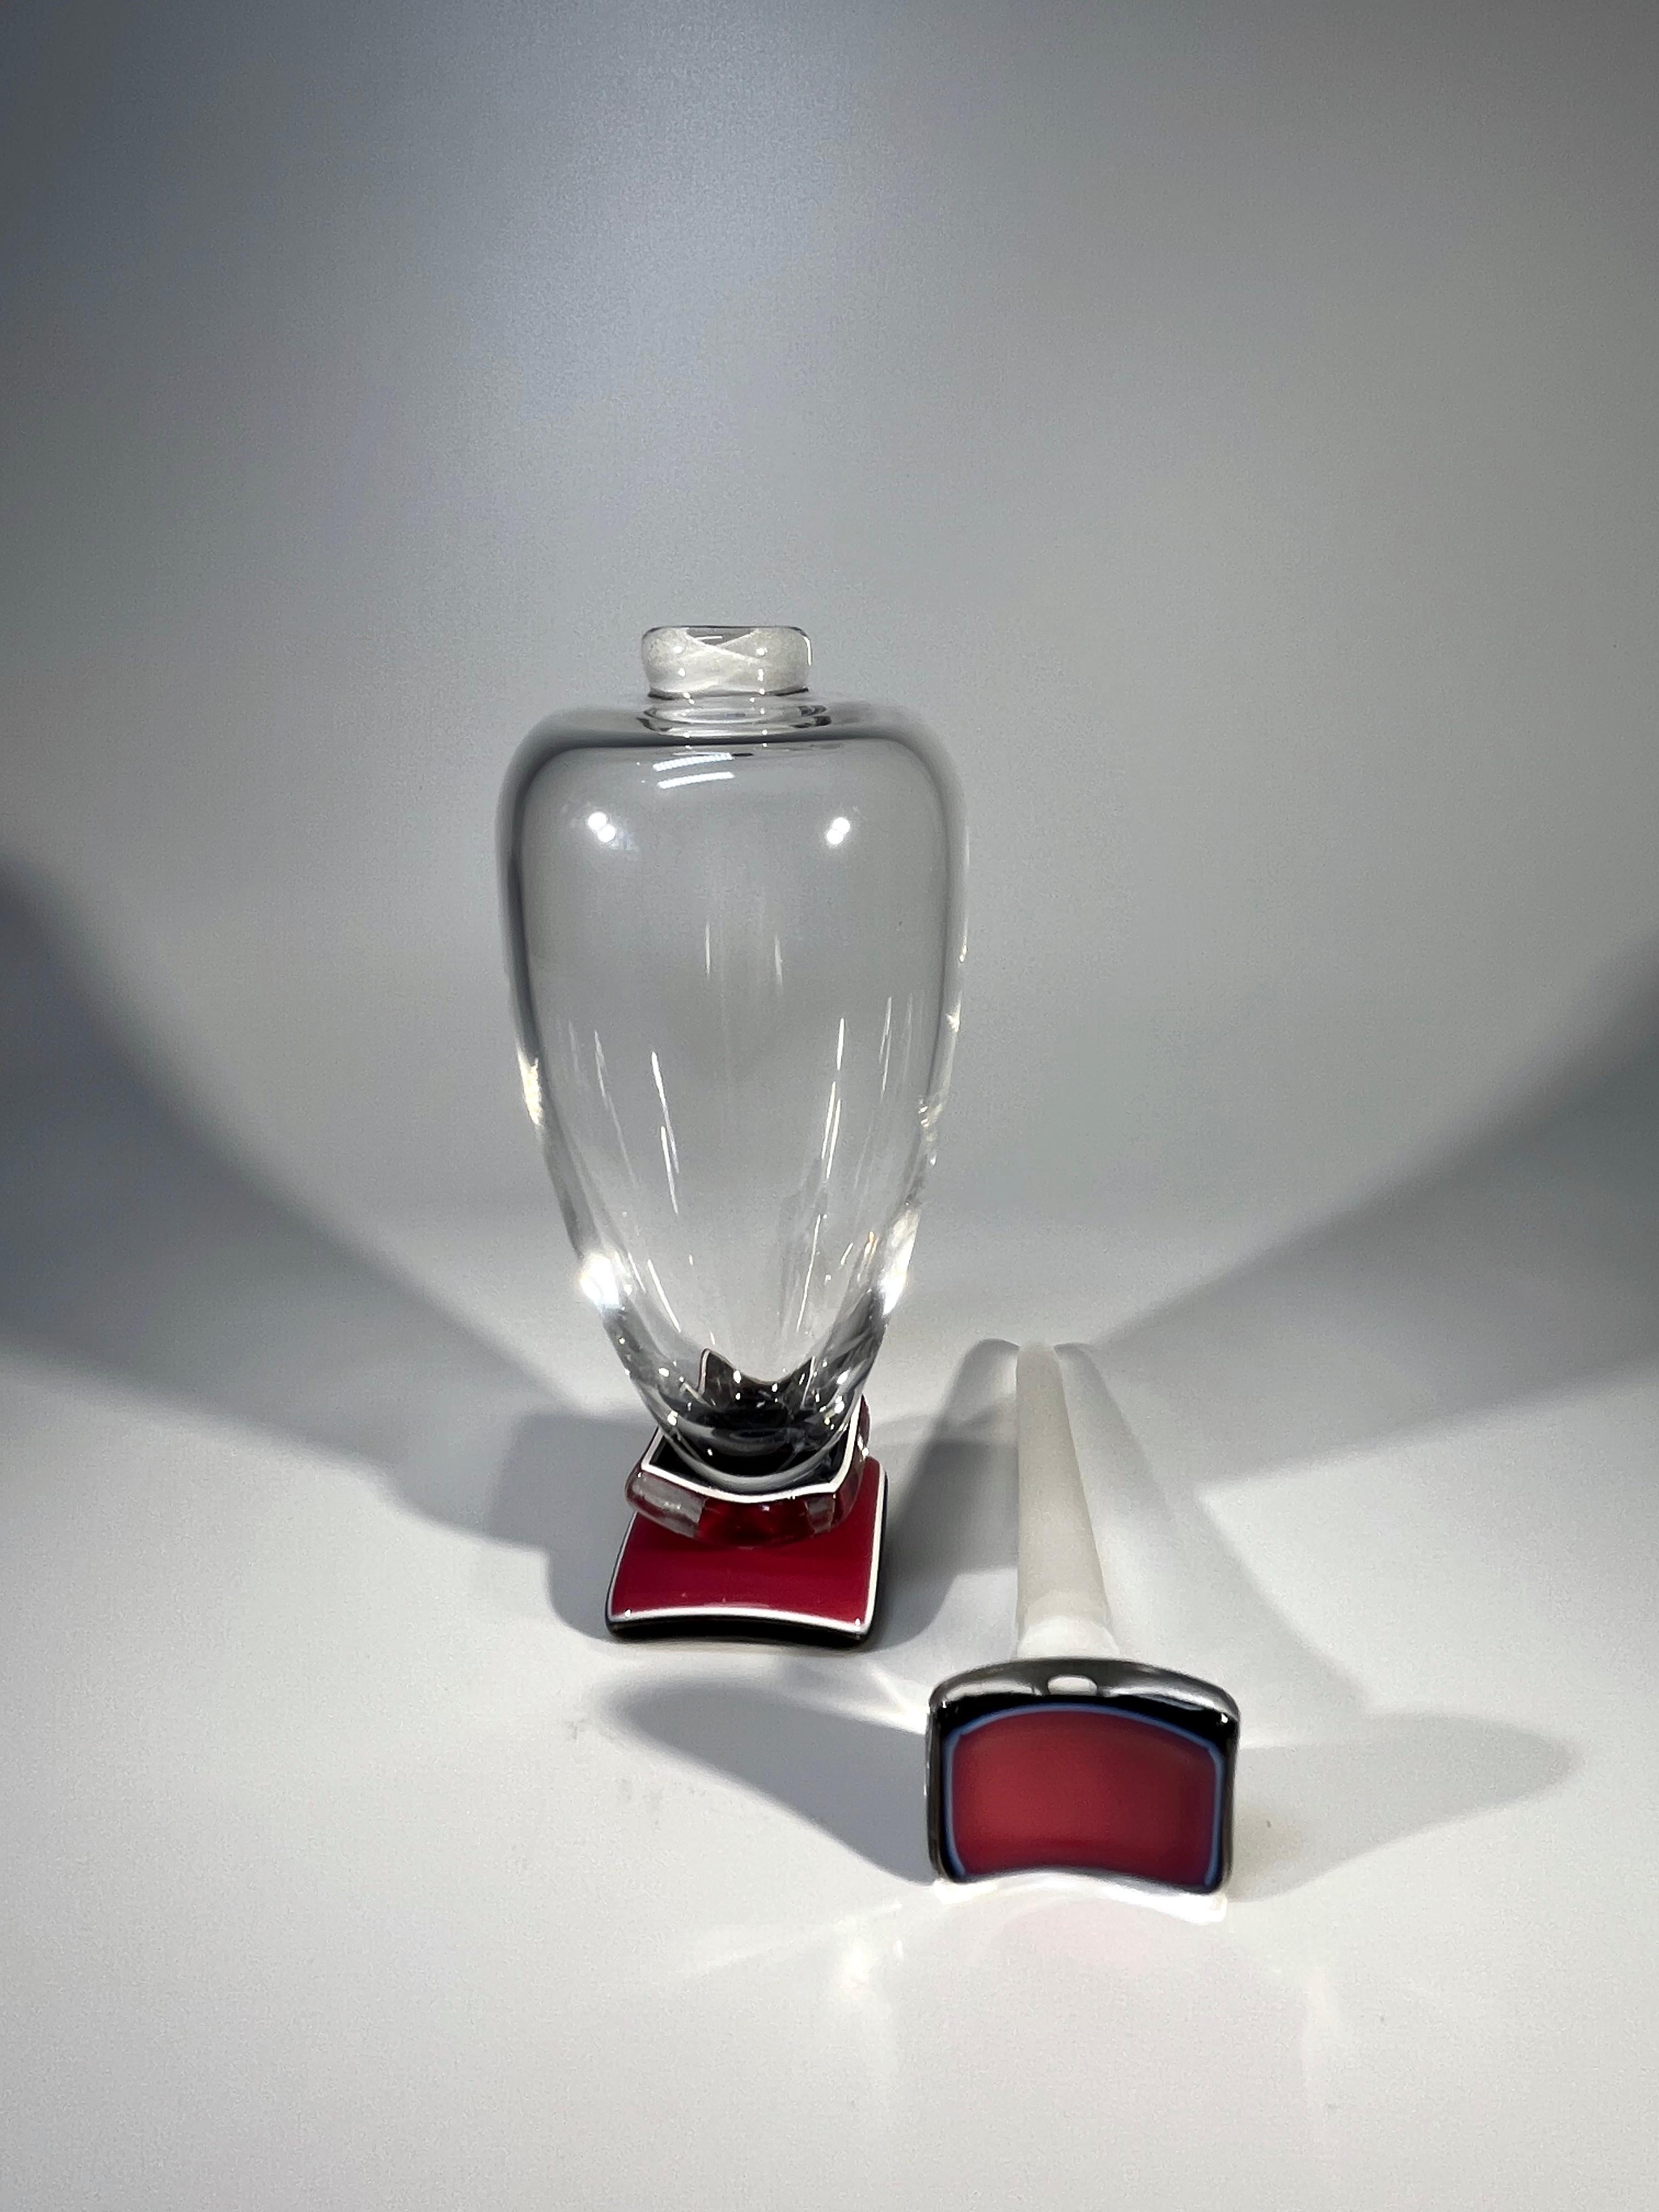 English Exquisitely Elegant, Hand Crafted Perfume Bottle By Anthony Wassell, England